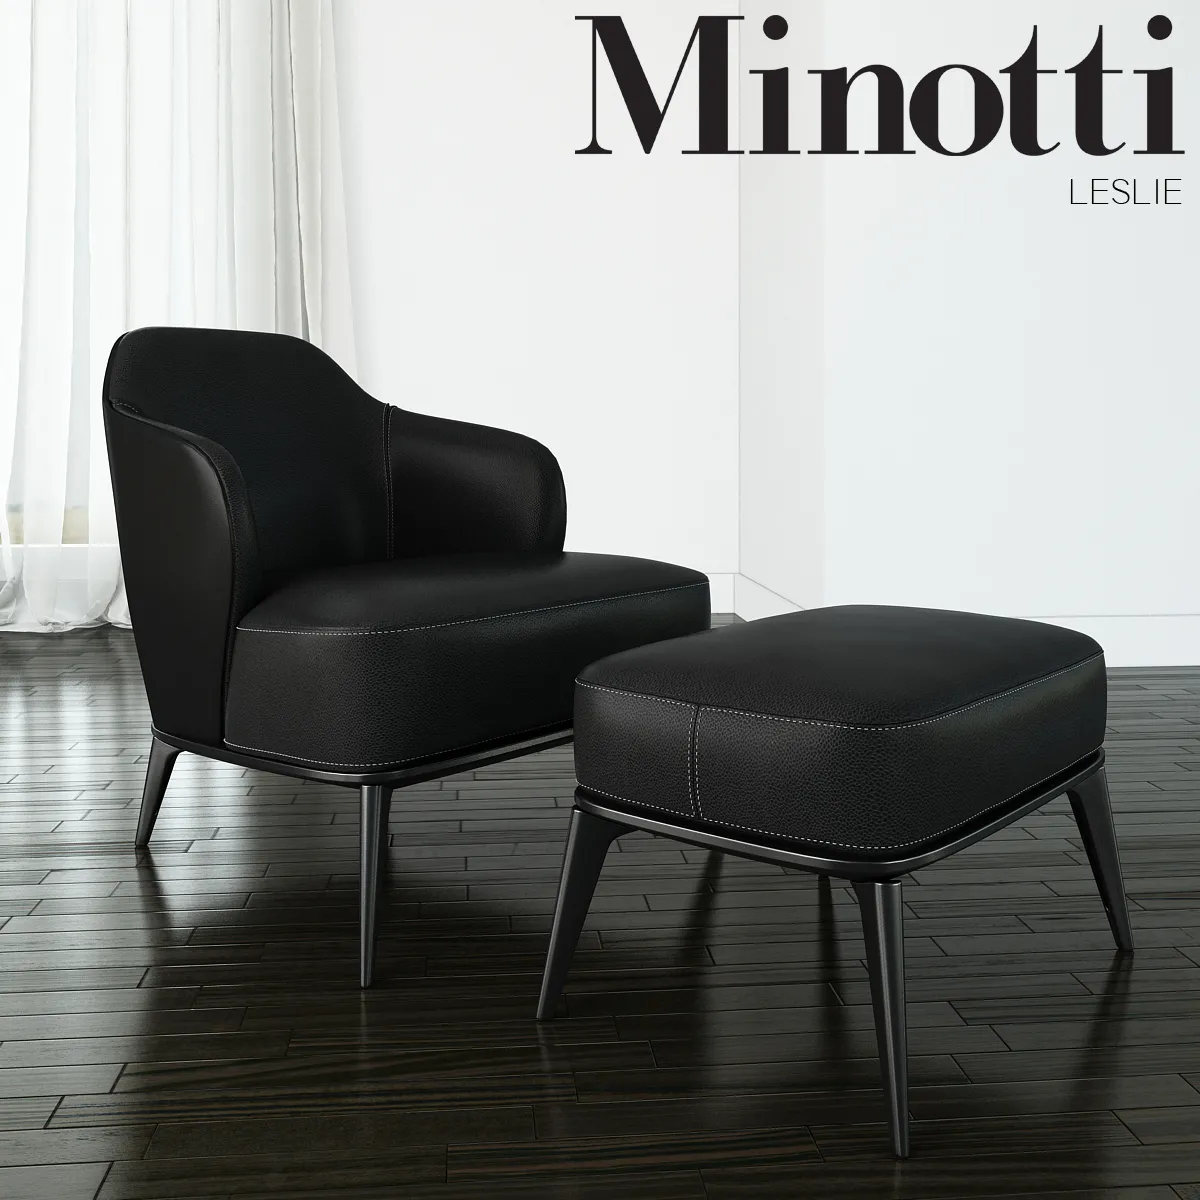 Armchair 3D Models – Minotti Leslie armchair with ottoman leather